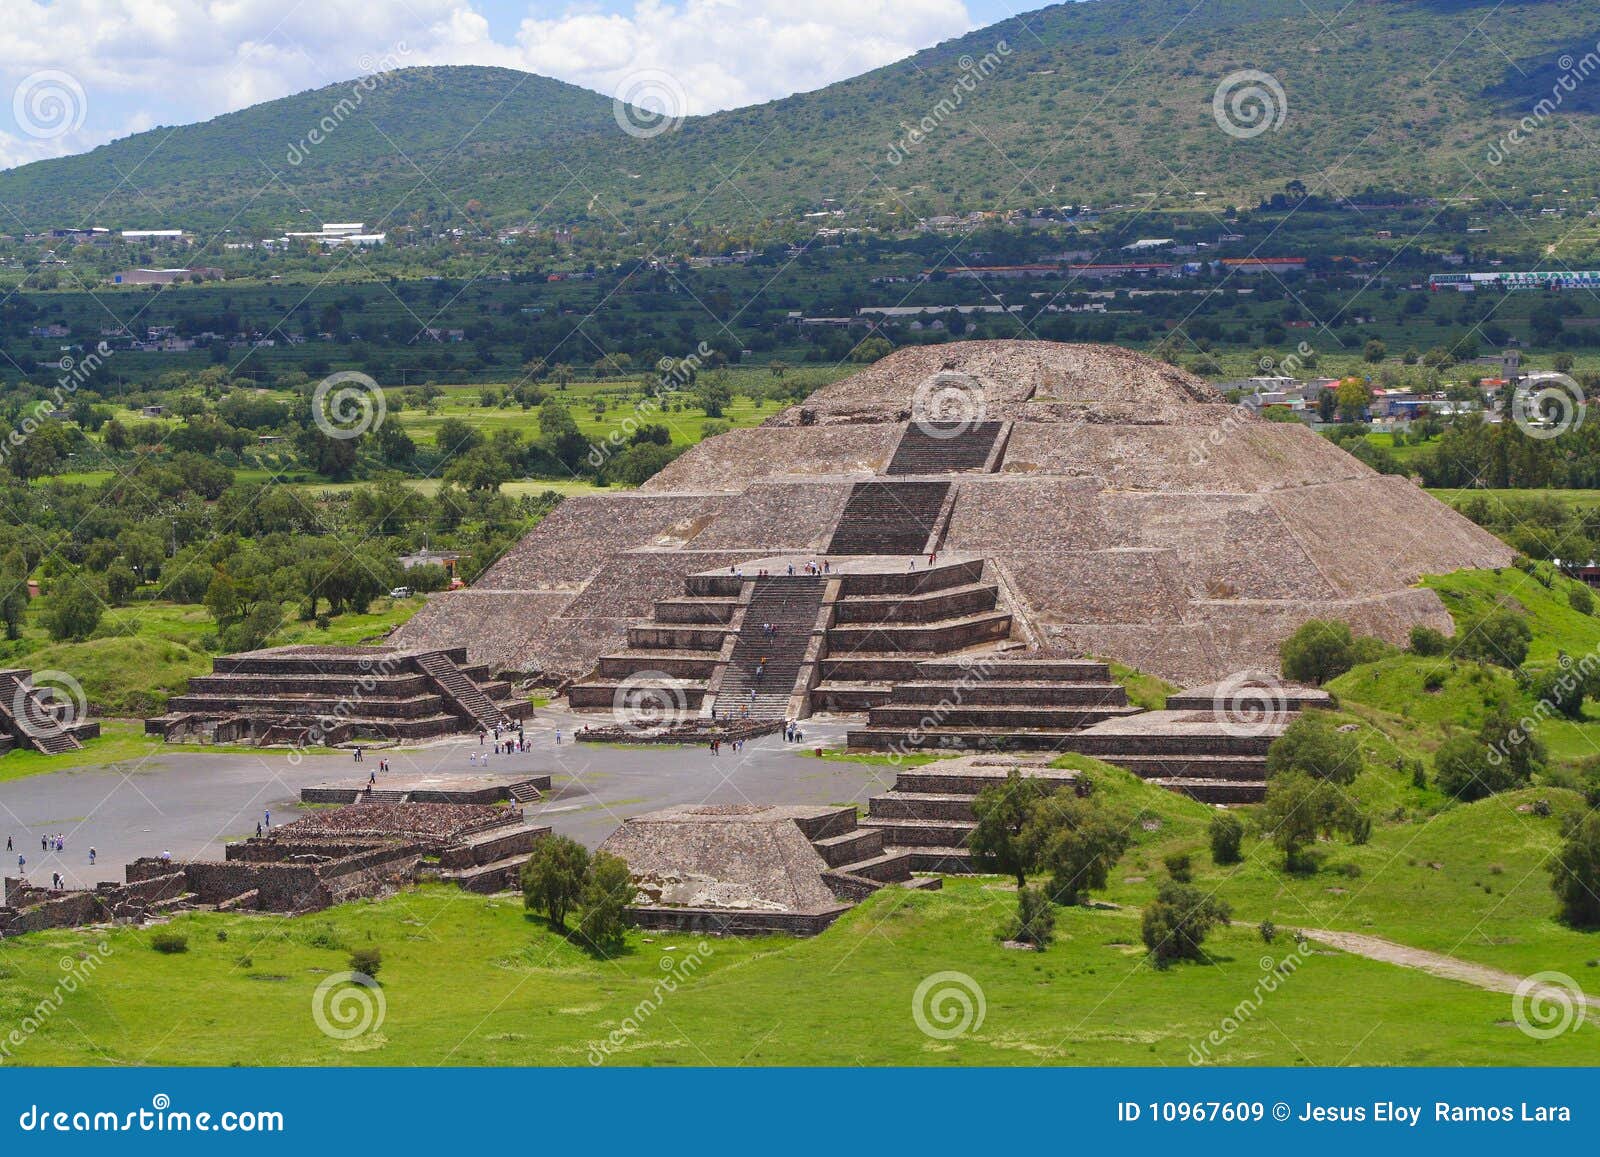 moon pyramid in teotihuacan, mexico ii